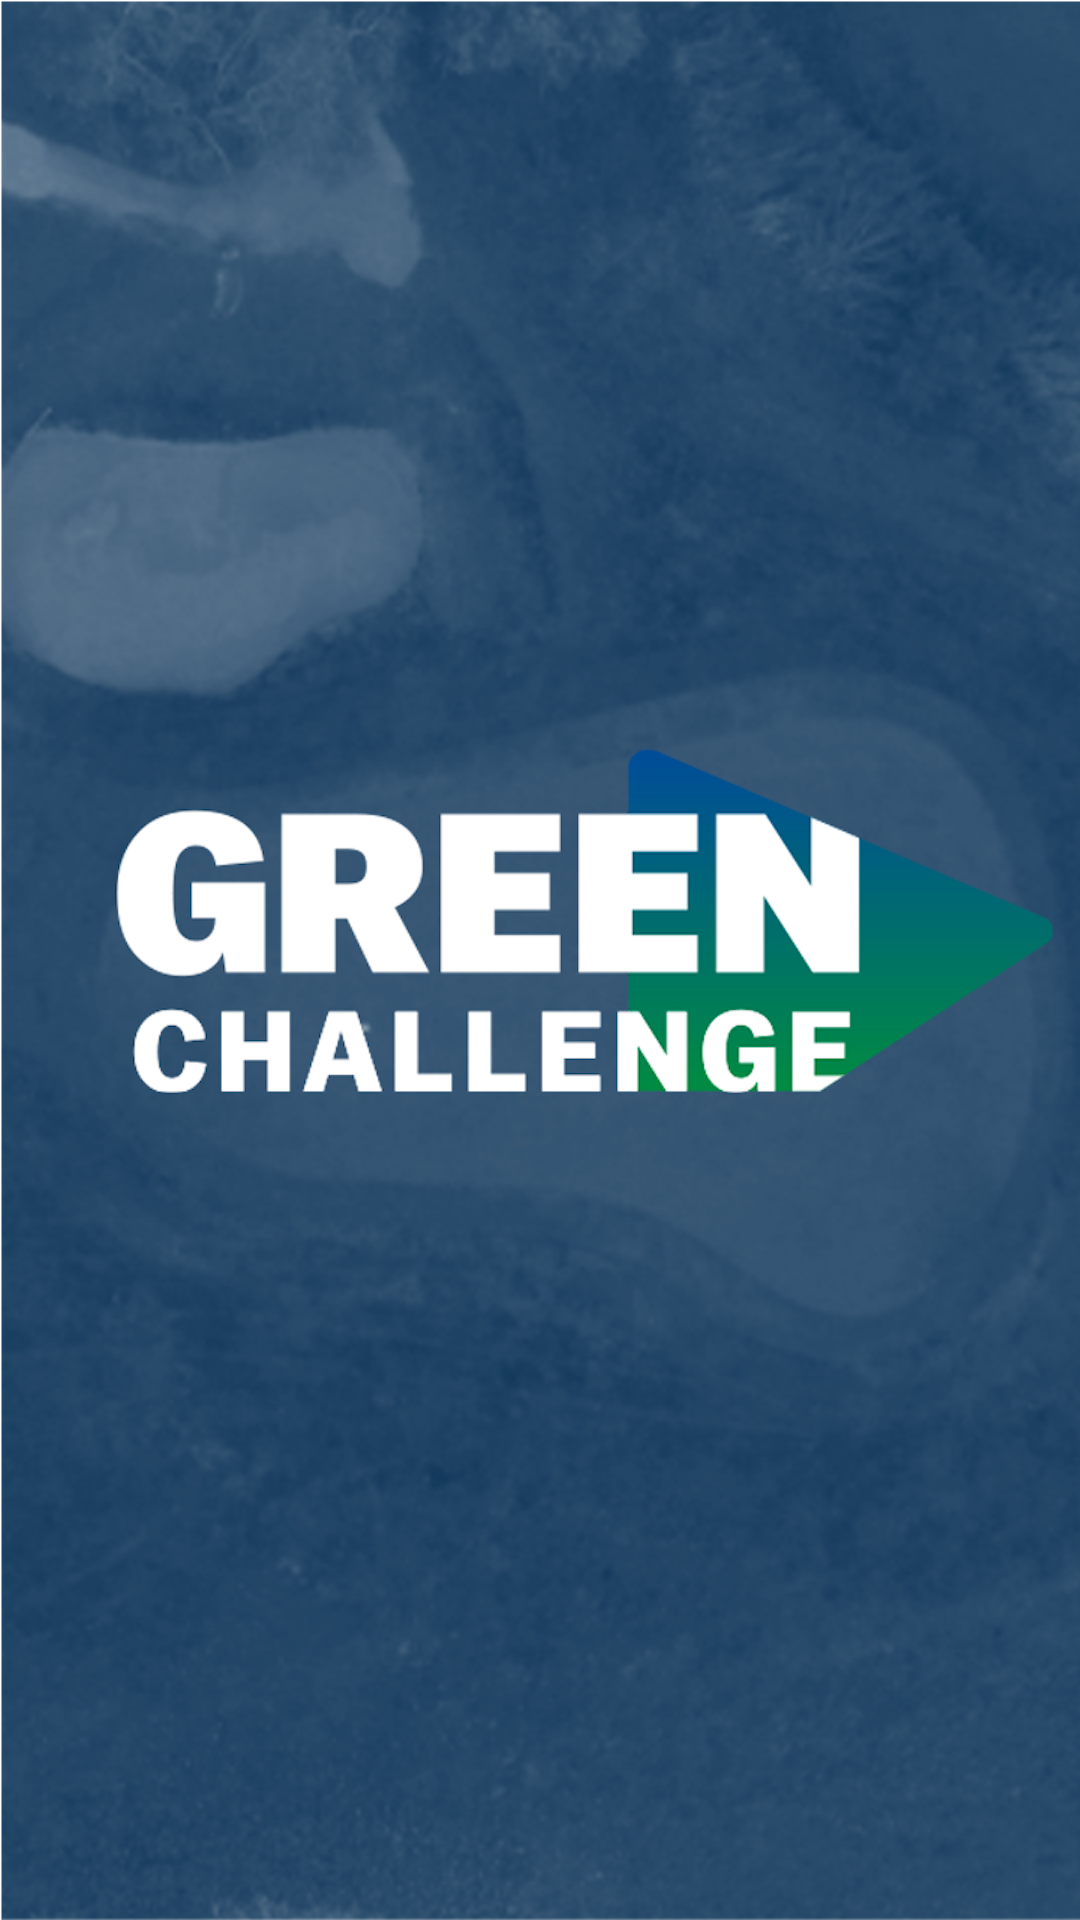 Green challenge